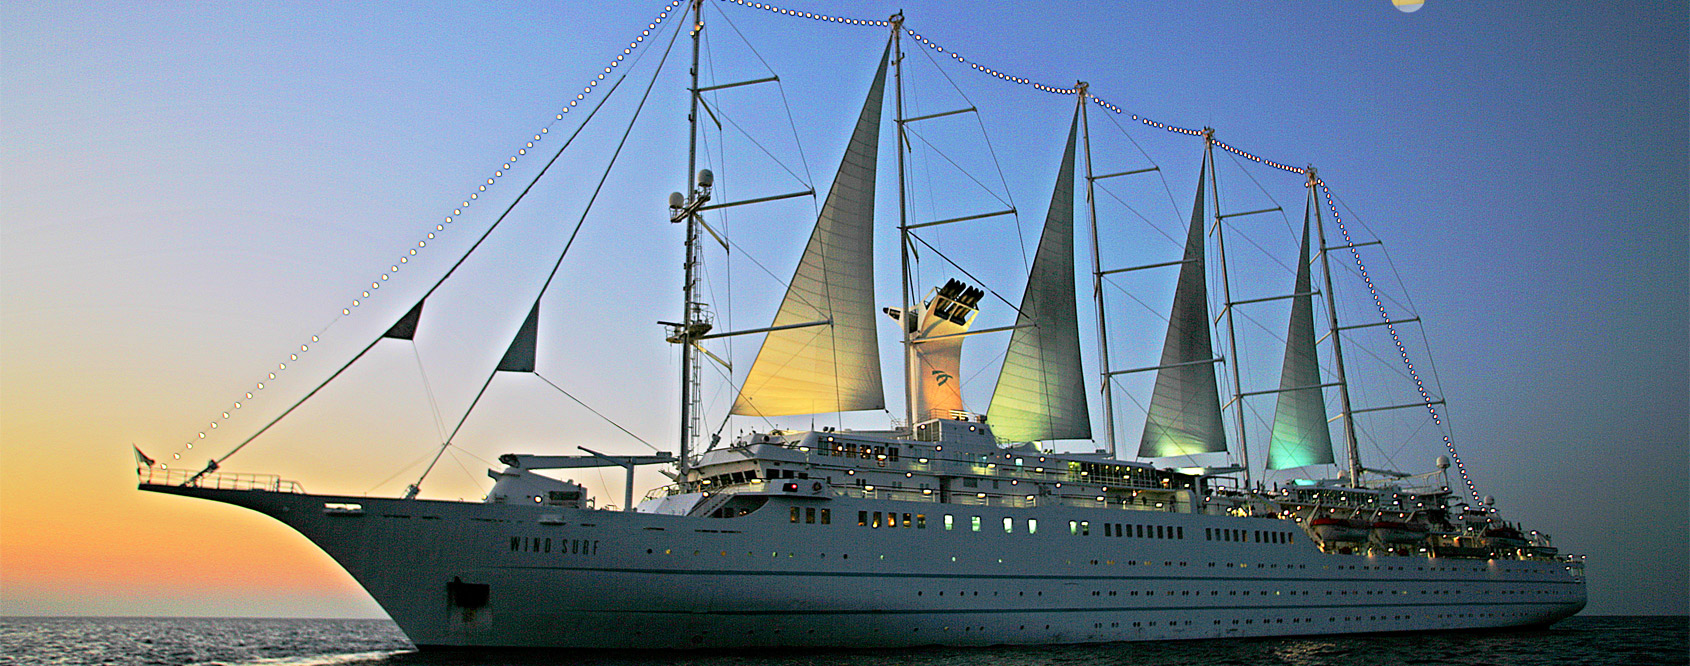 Windstar Cruises Main Image